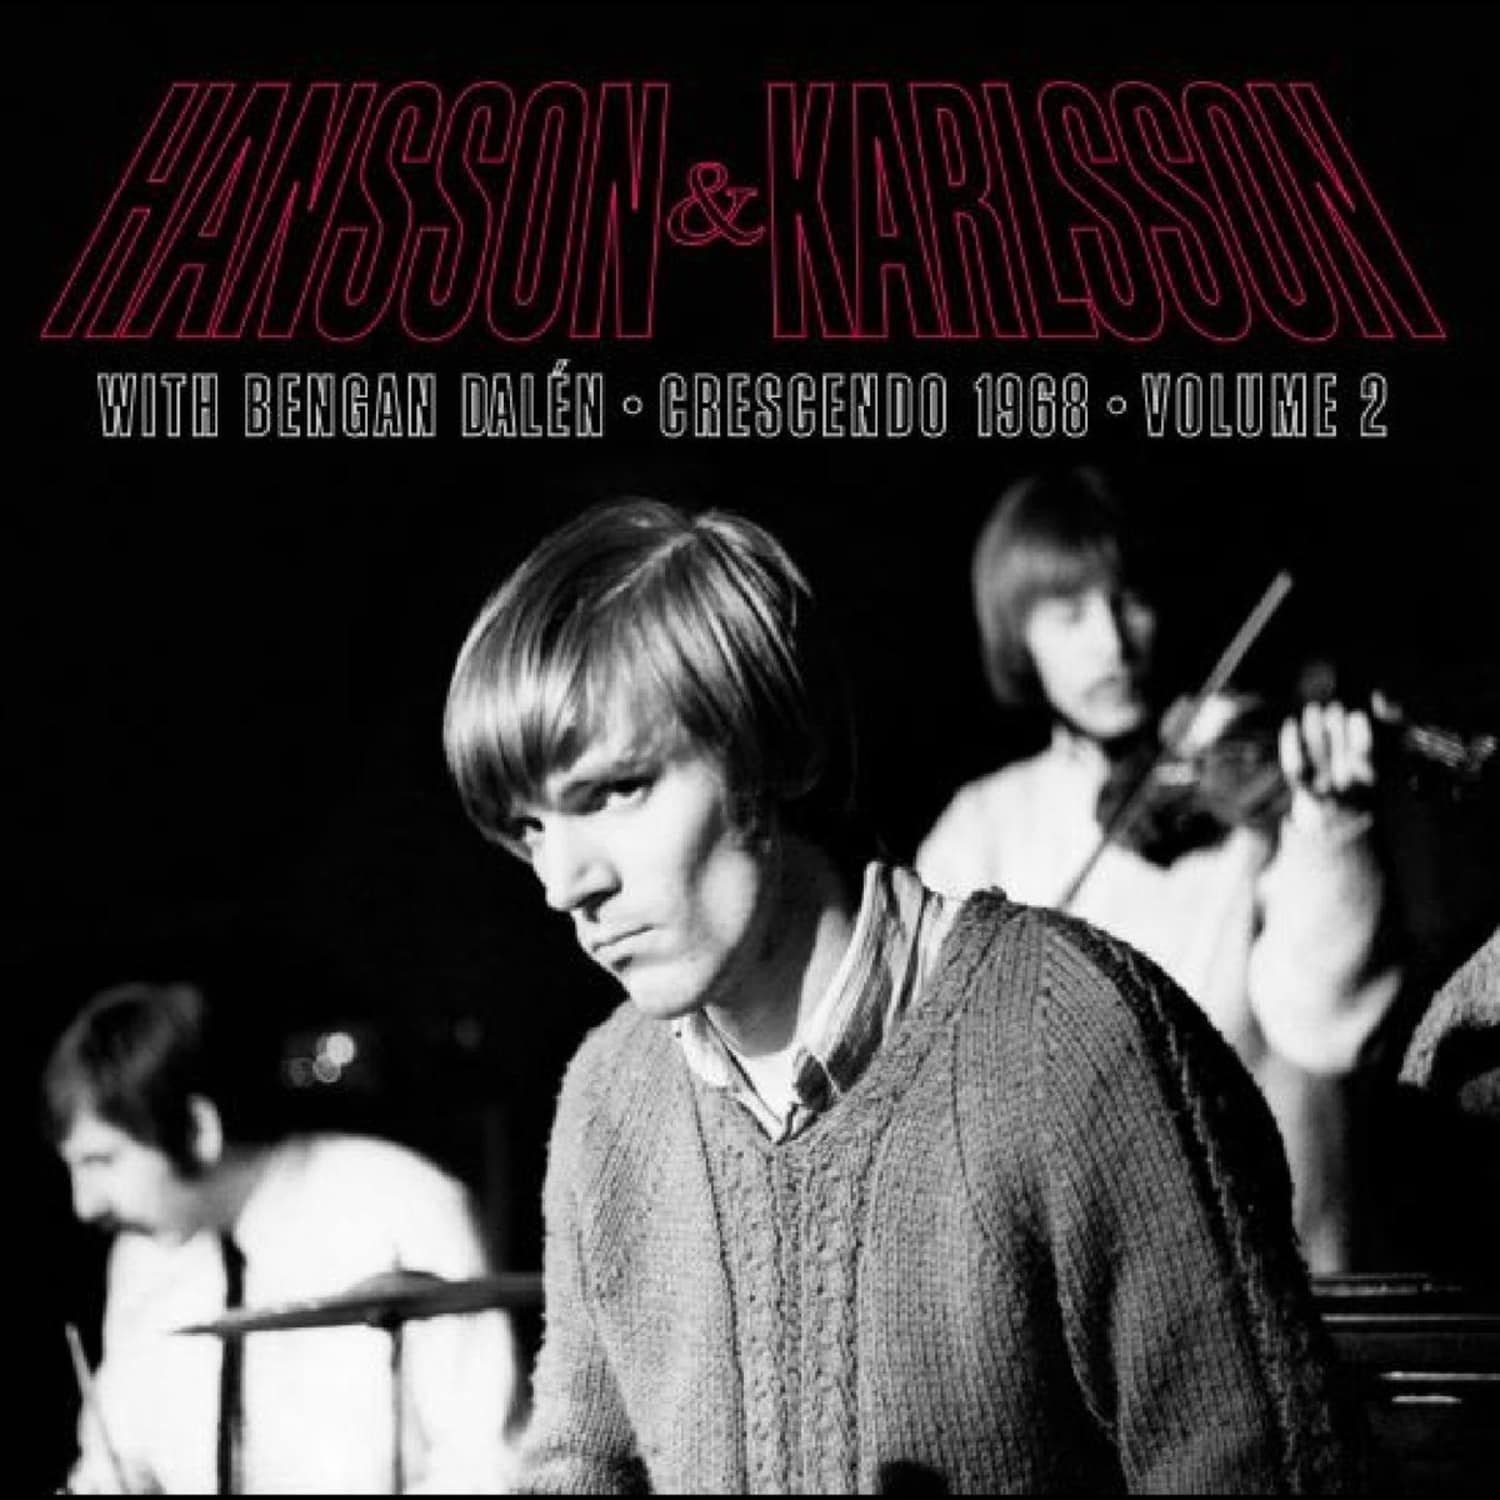 Hansson & Karlsson - CRESCENDO 1968 VOL. 2 